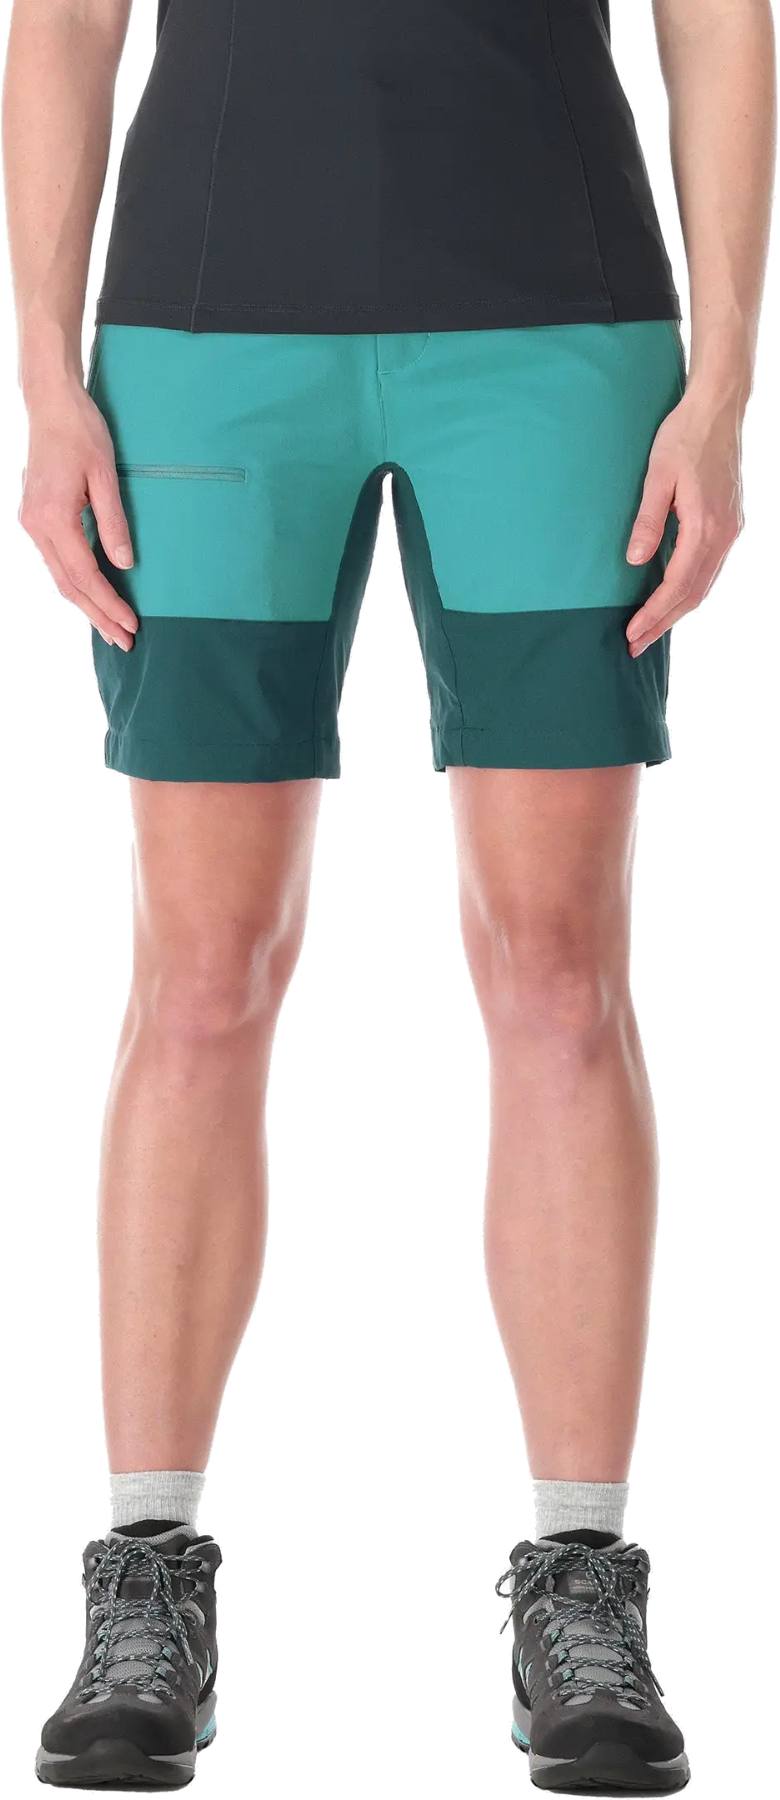 Women’s Torque Mountain Shorts 8″ Turquoise 8